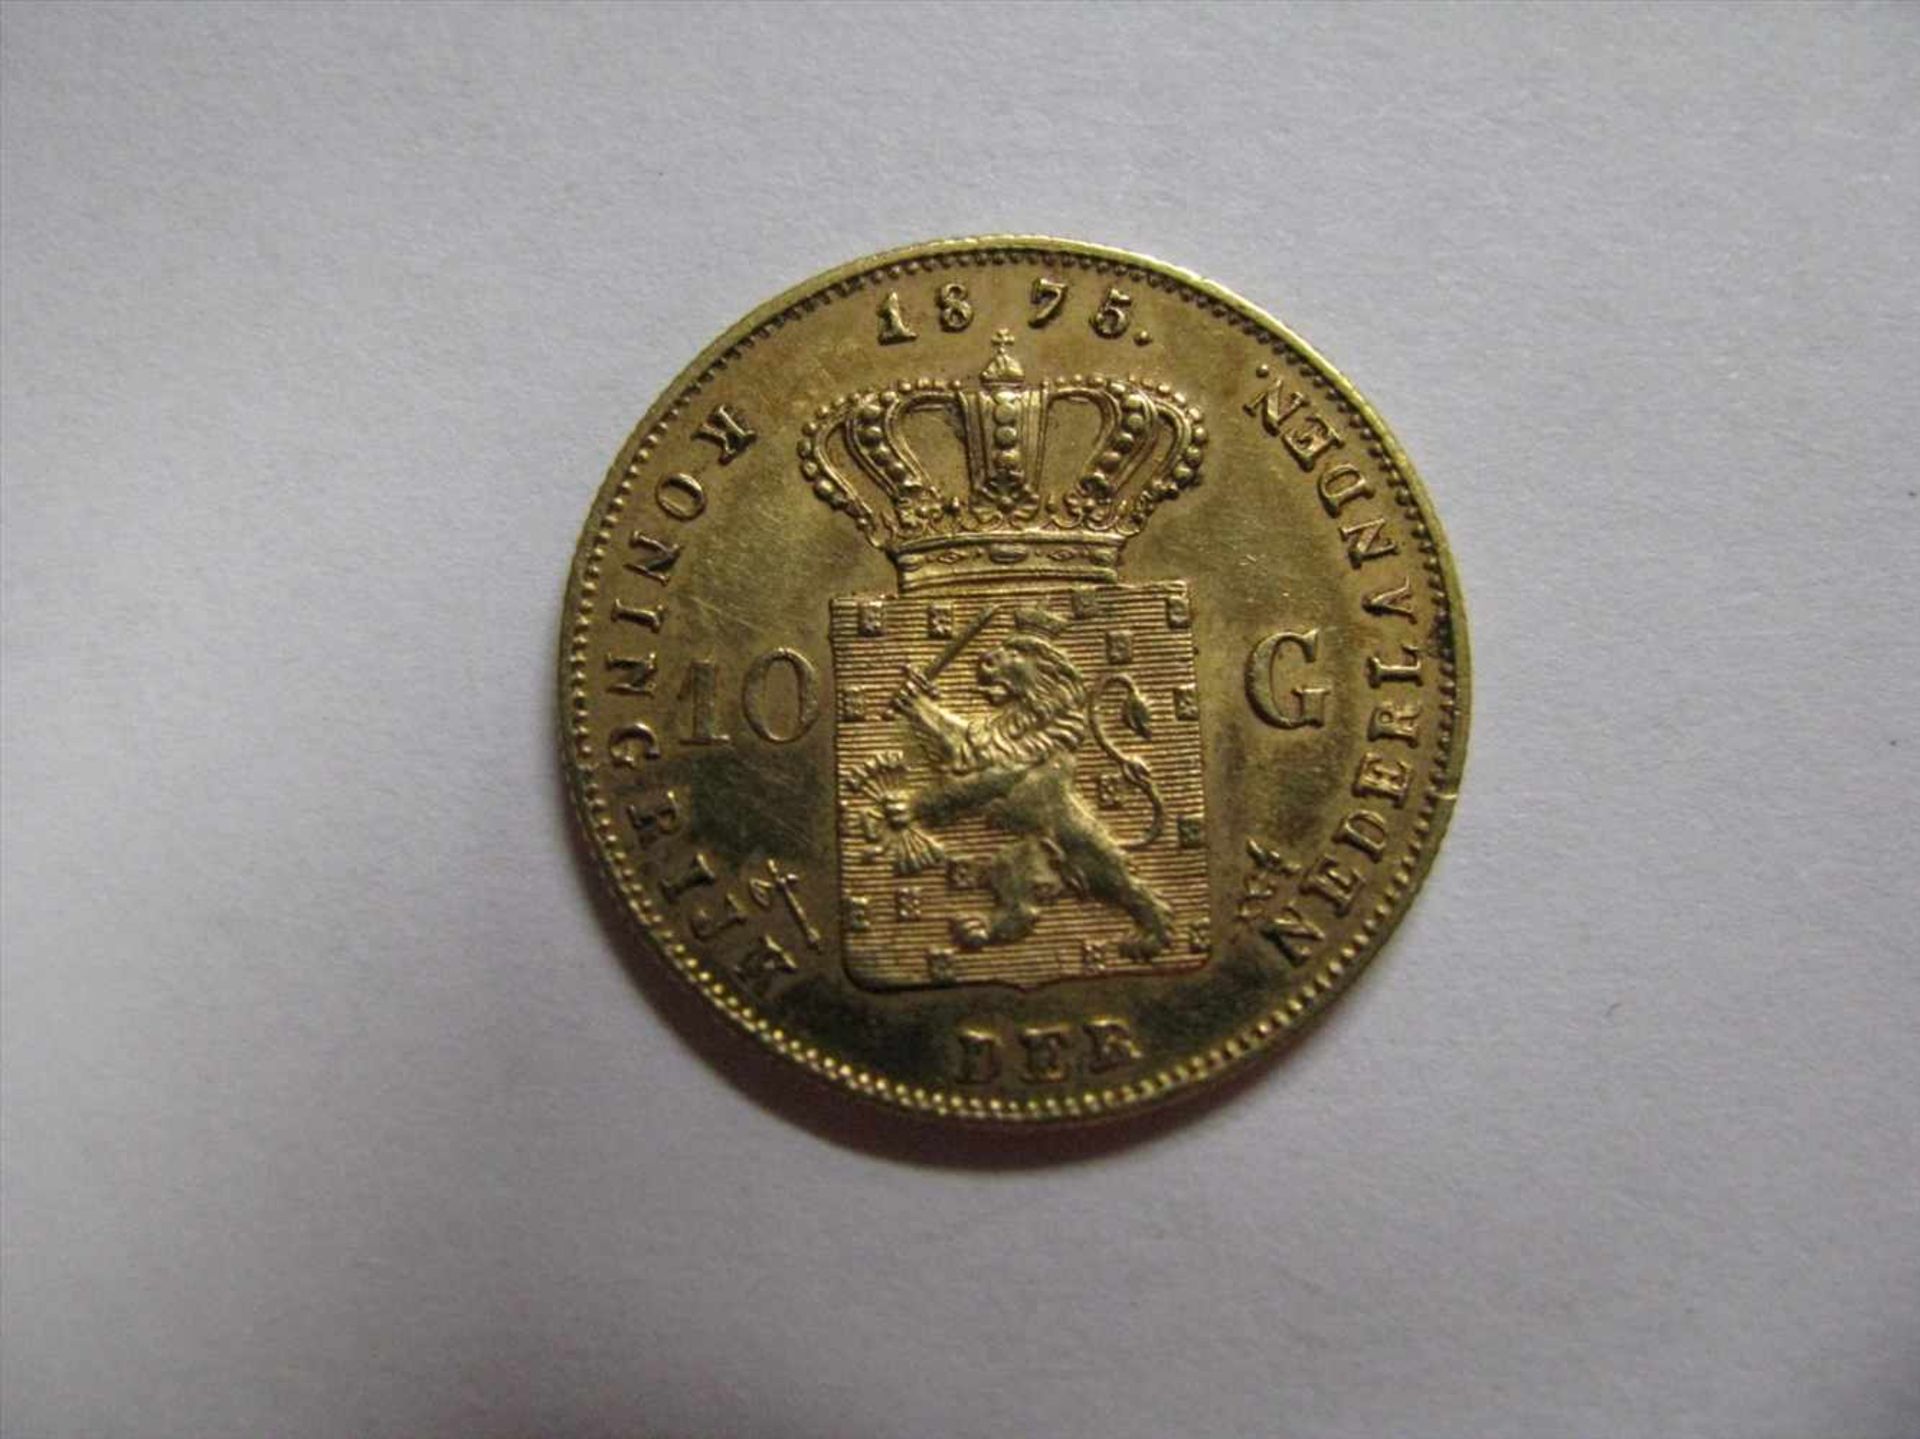 Goldmünze, Niederlande, 10 Gulden, Willem III. der Niederlande, 1875, 6,7 g, d 2,2 cm. - Image 2 of 2